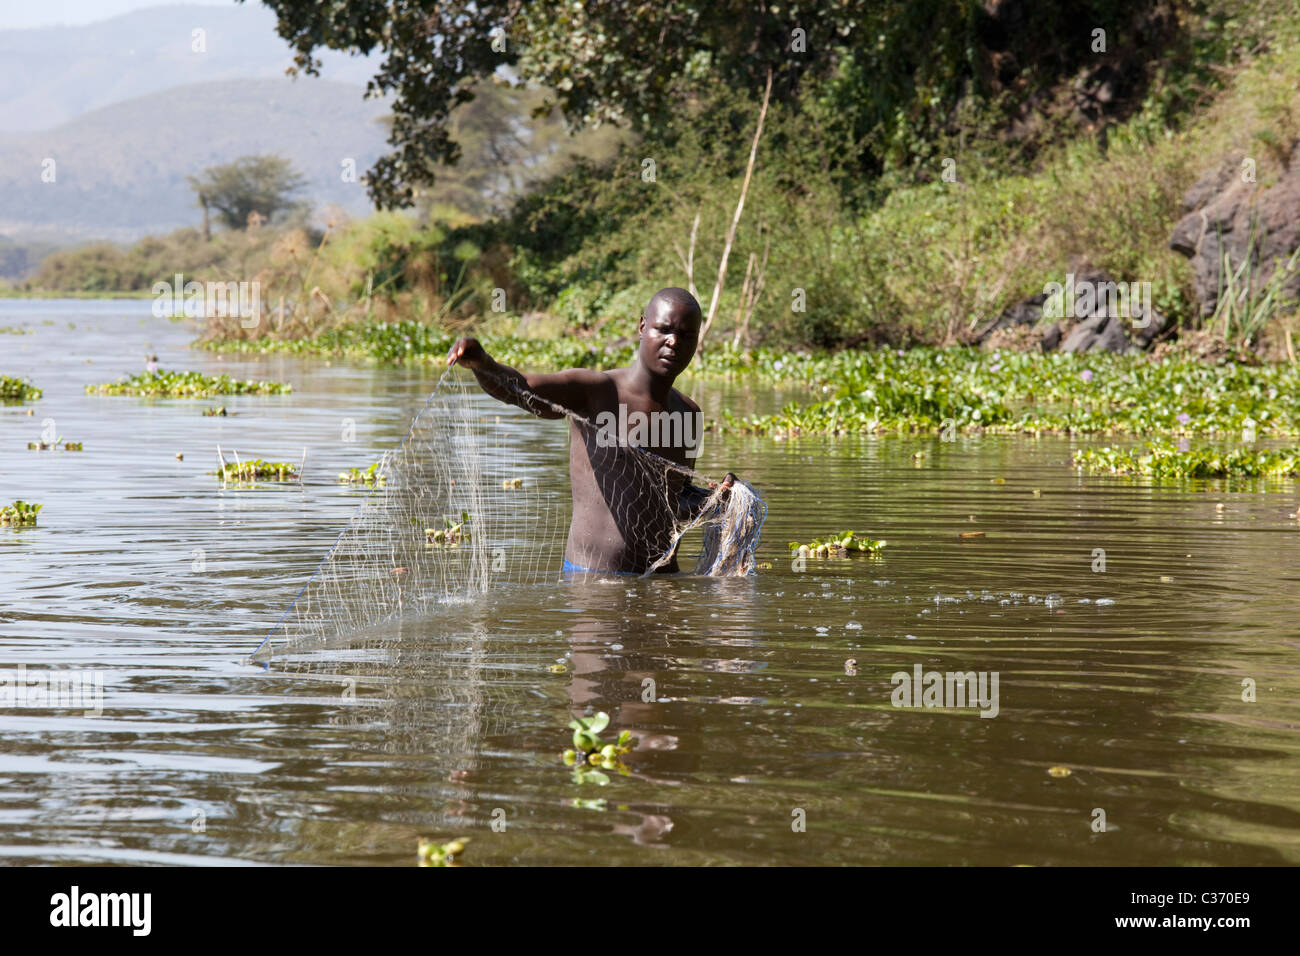 Kenya fisherman hi-res stock photography and images - Alamy